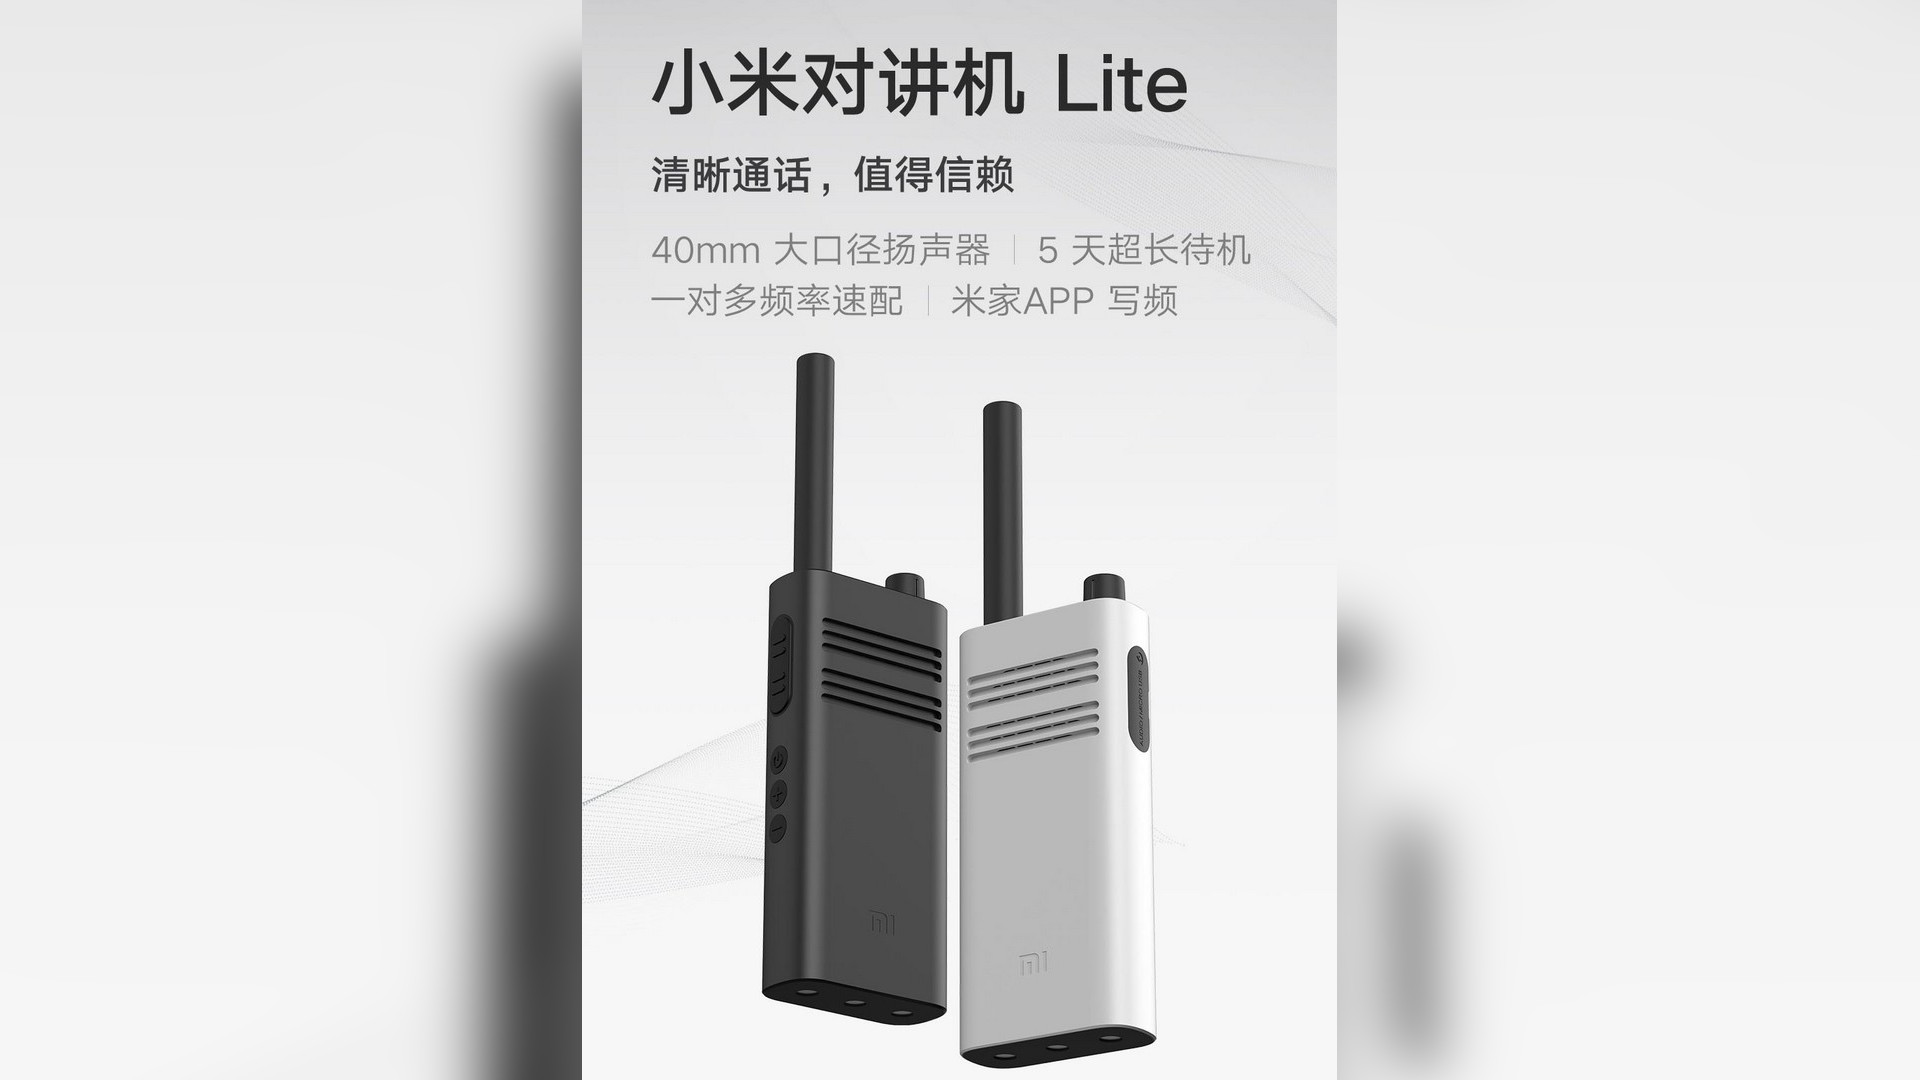 Atento Pertenece dinámica Xiaomi: ecco il nuovo Mi Walkie Talkie Lite economico e smart - GizChina.it